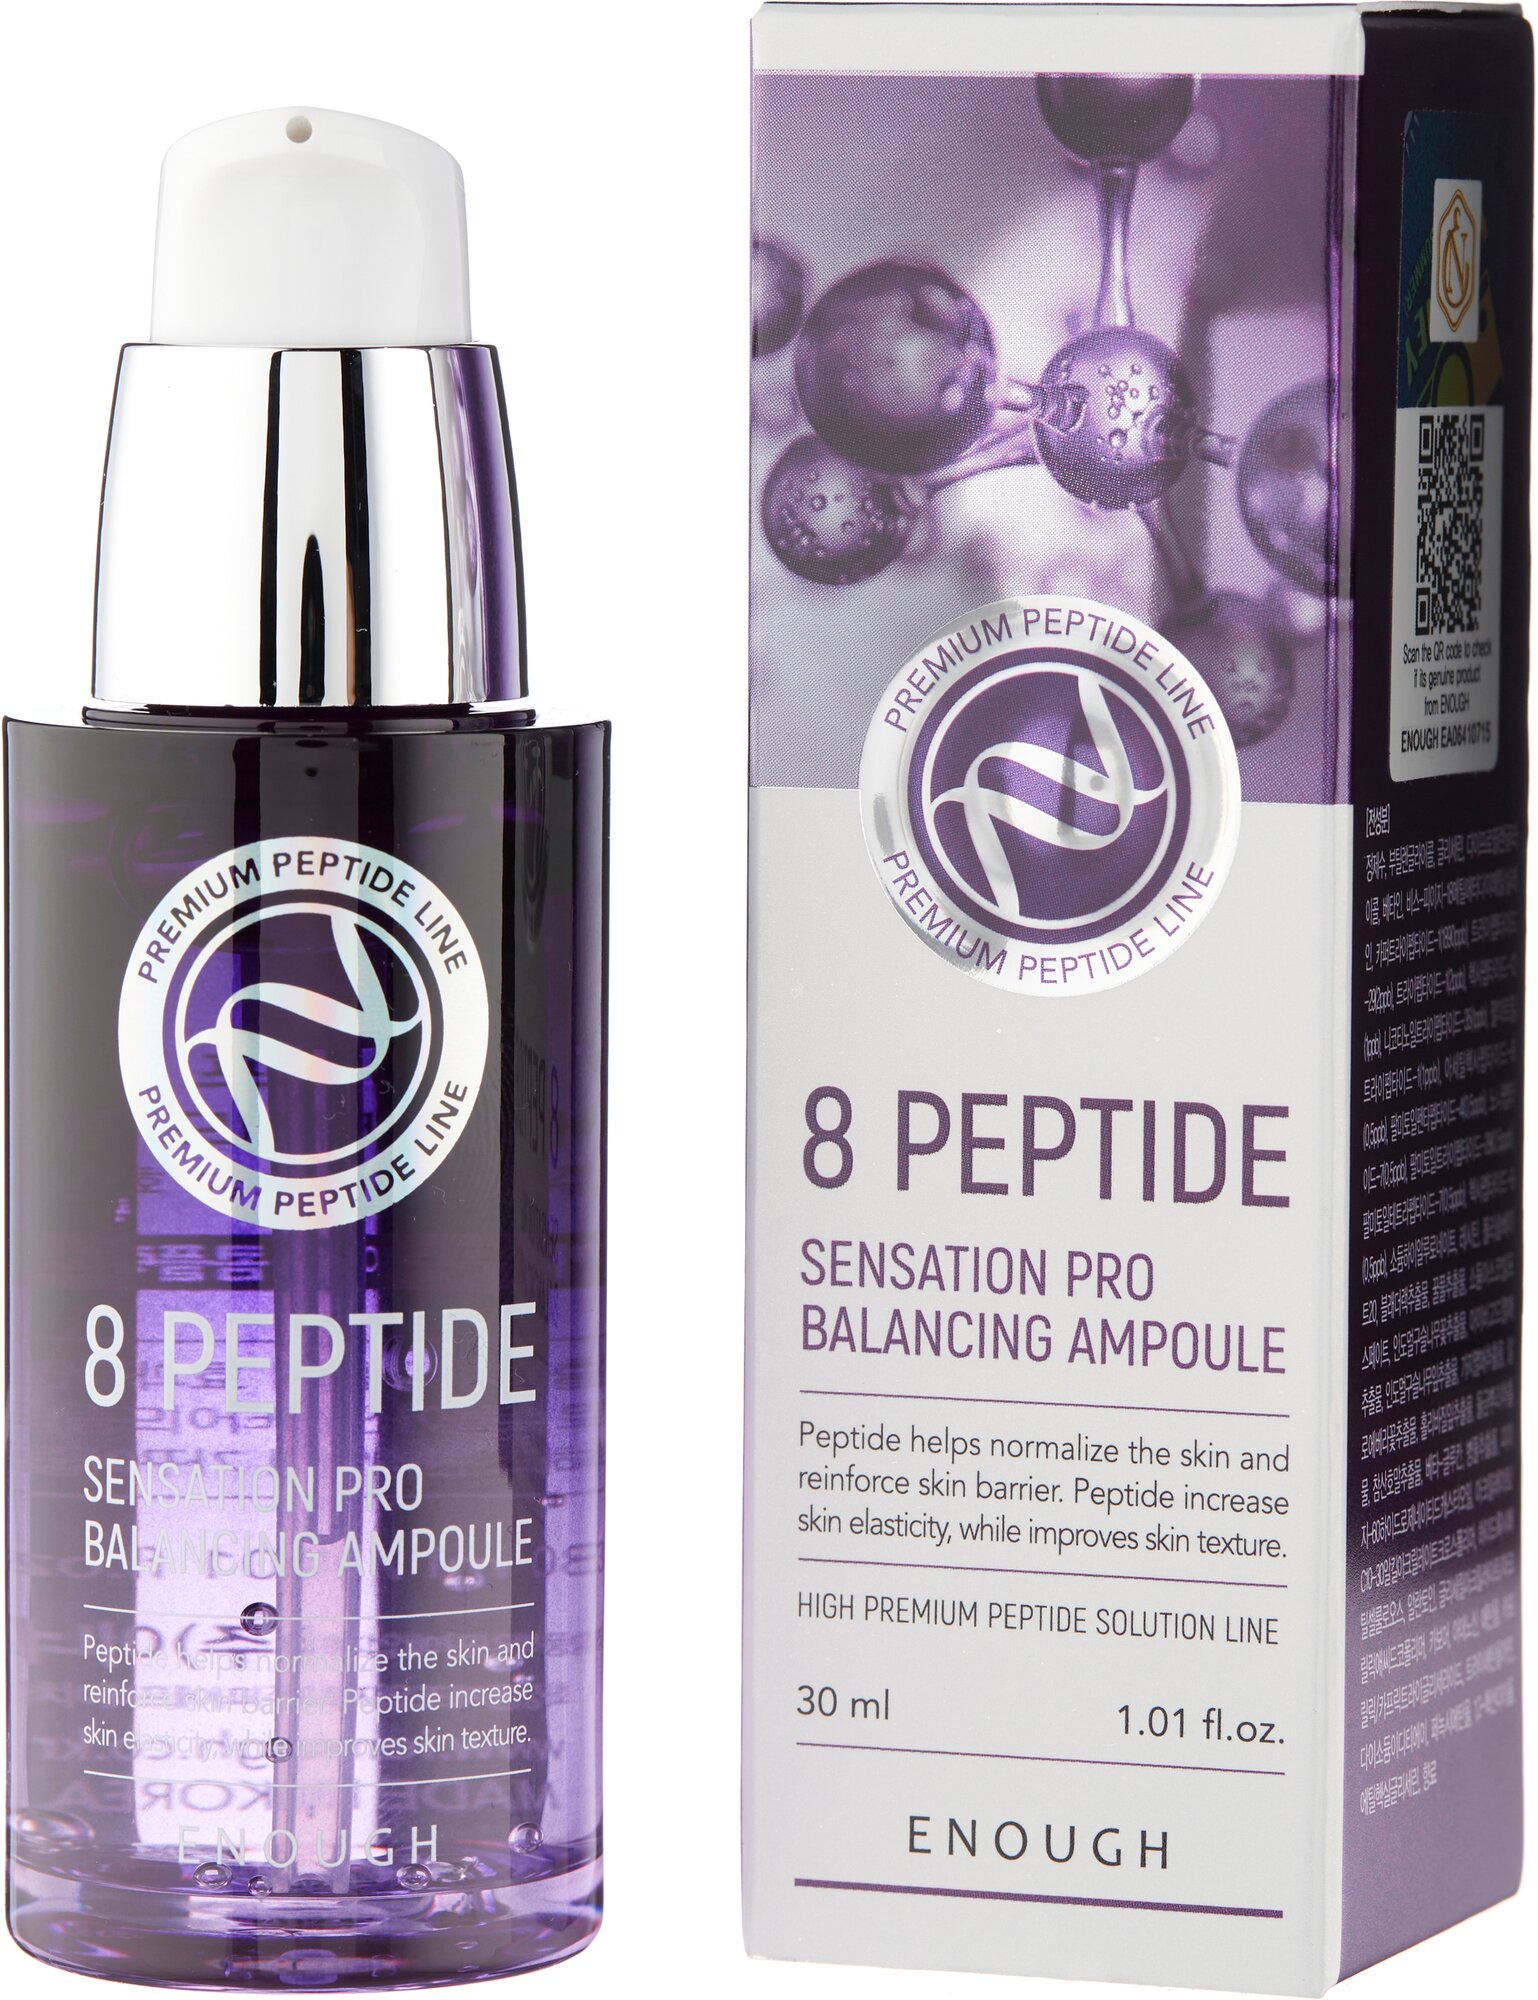 Enough 8 Peptide Sensation Pro Balancing Ampoule Сыворотка для лица с пептидным комплексом, 30 мл